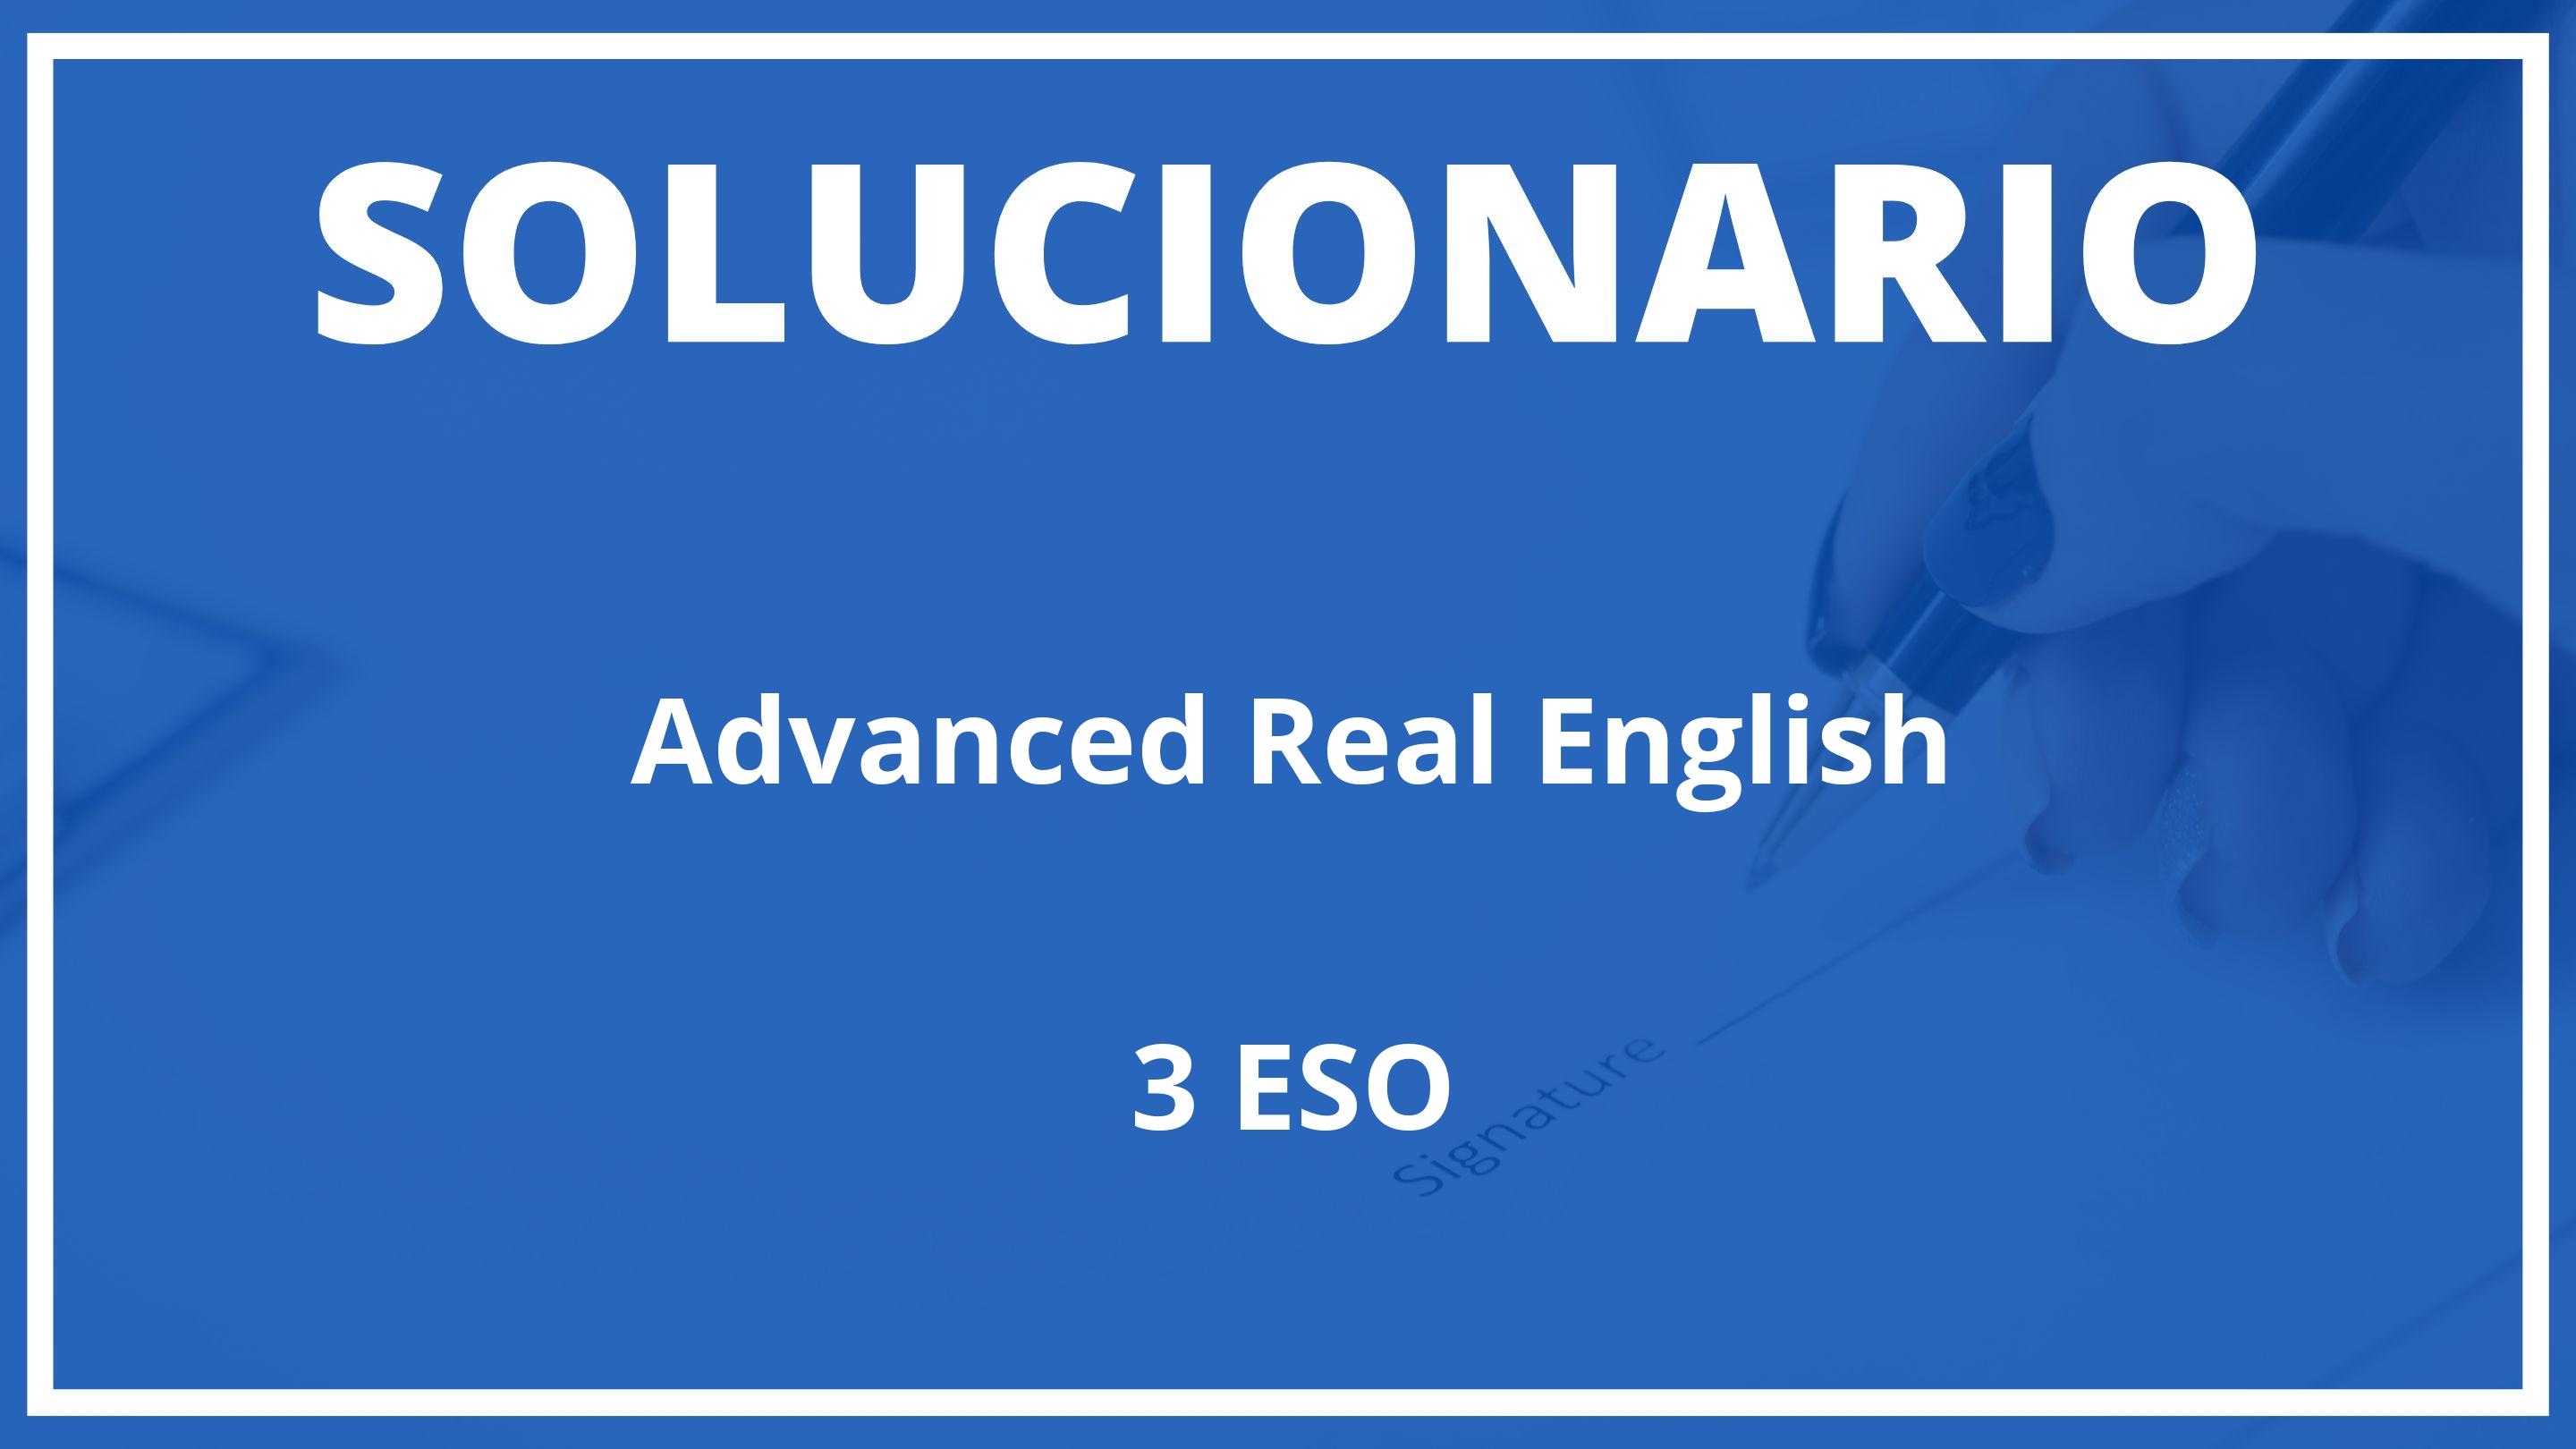 Solucionario Advanced Real English Burlington Books 3 ESO